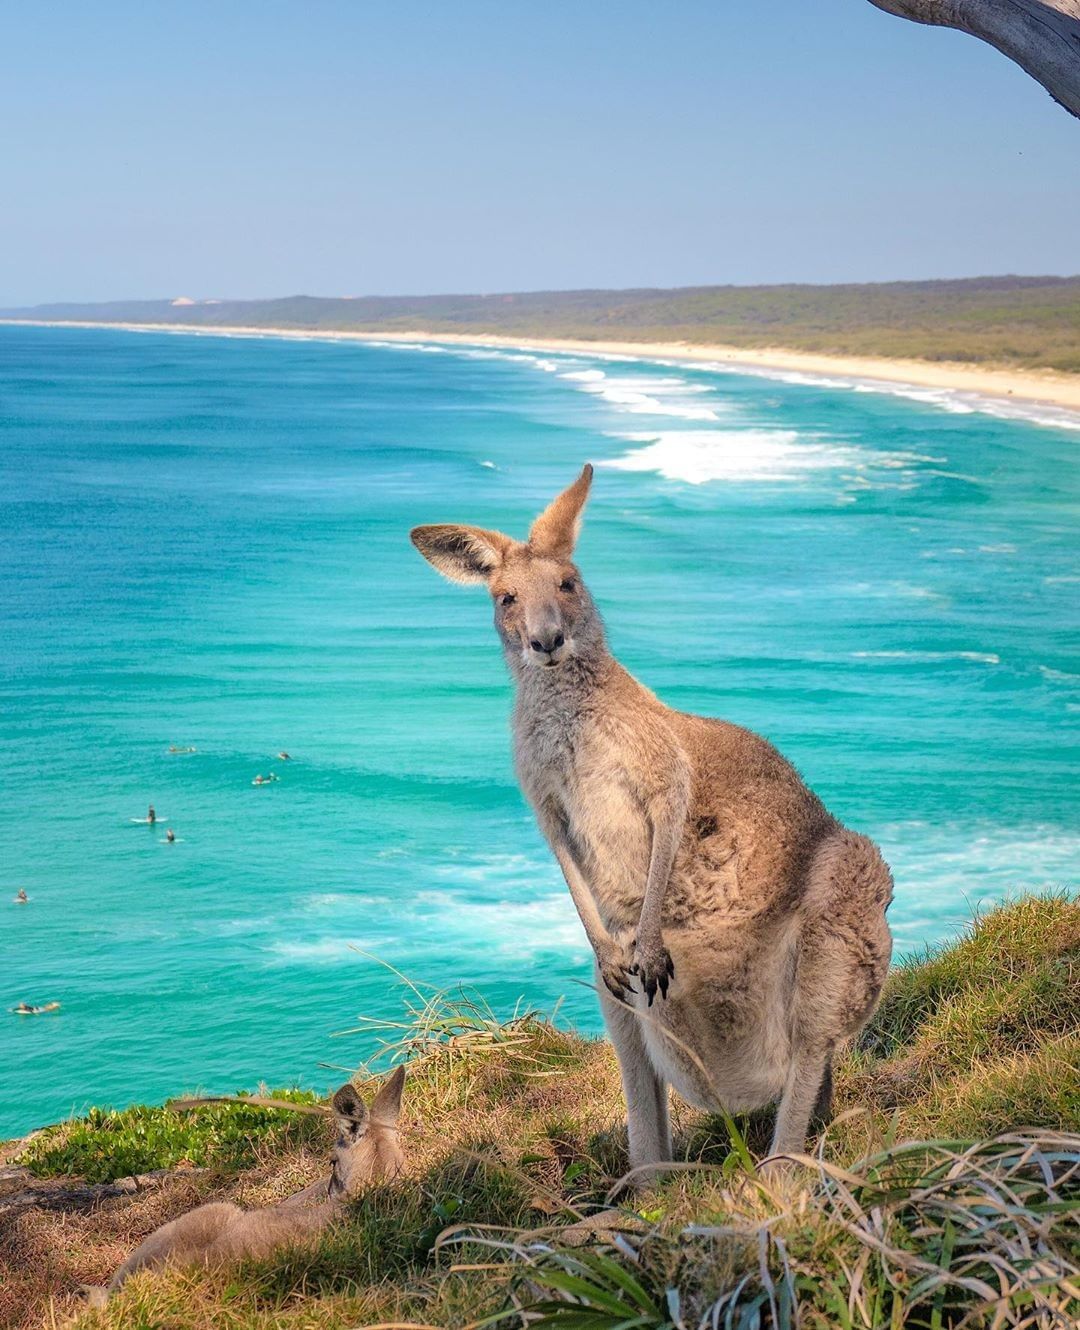 TOURISM AUSTRALIA'S TOP 10 SOCIAL POSTS OF 2020